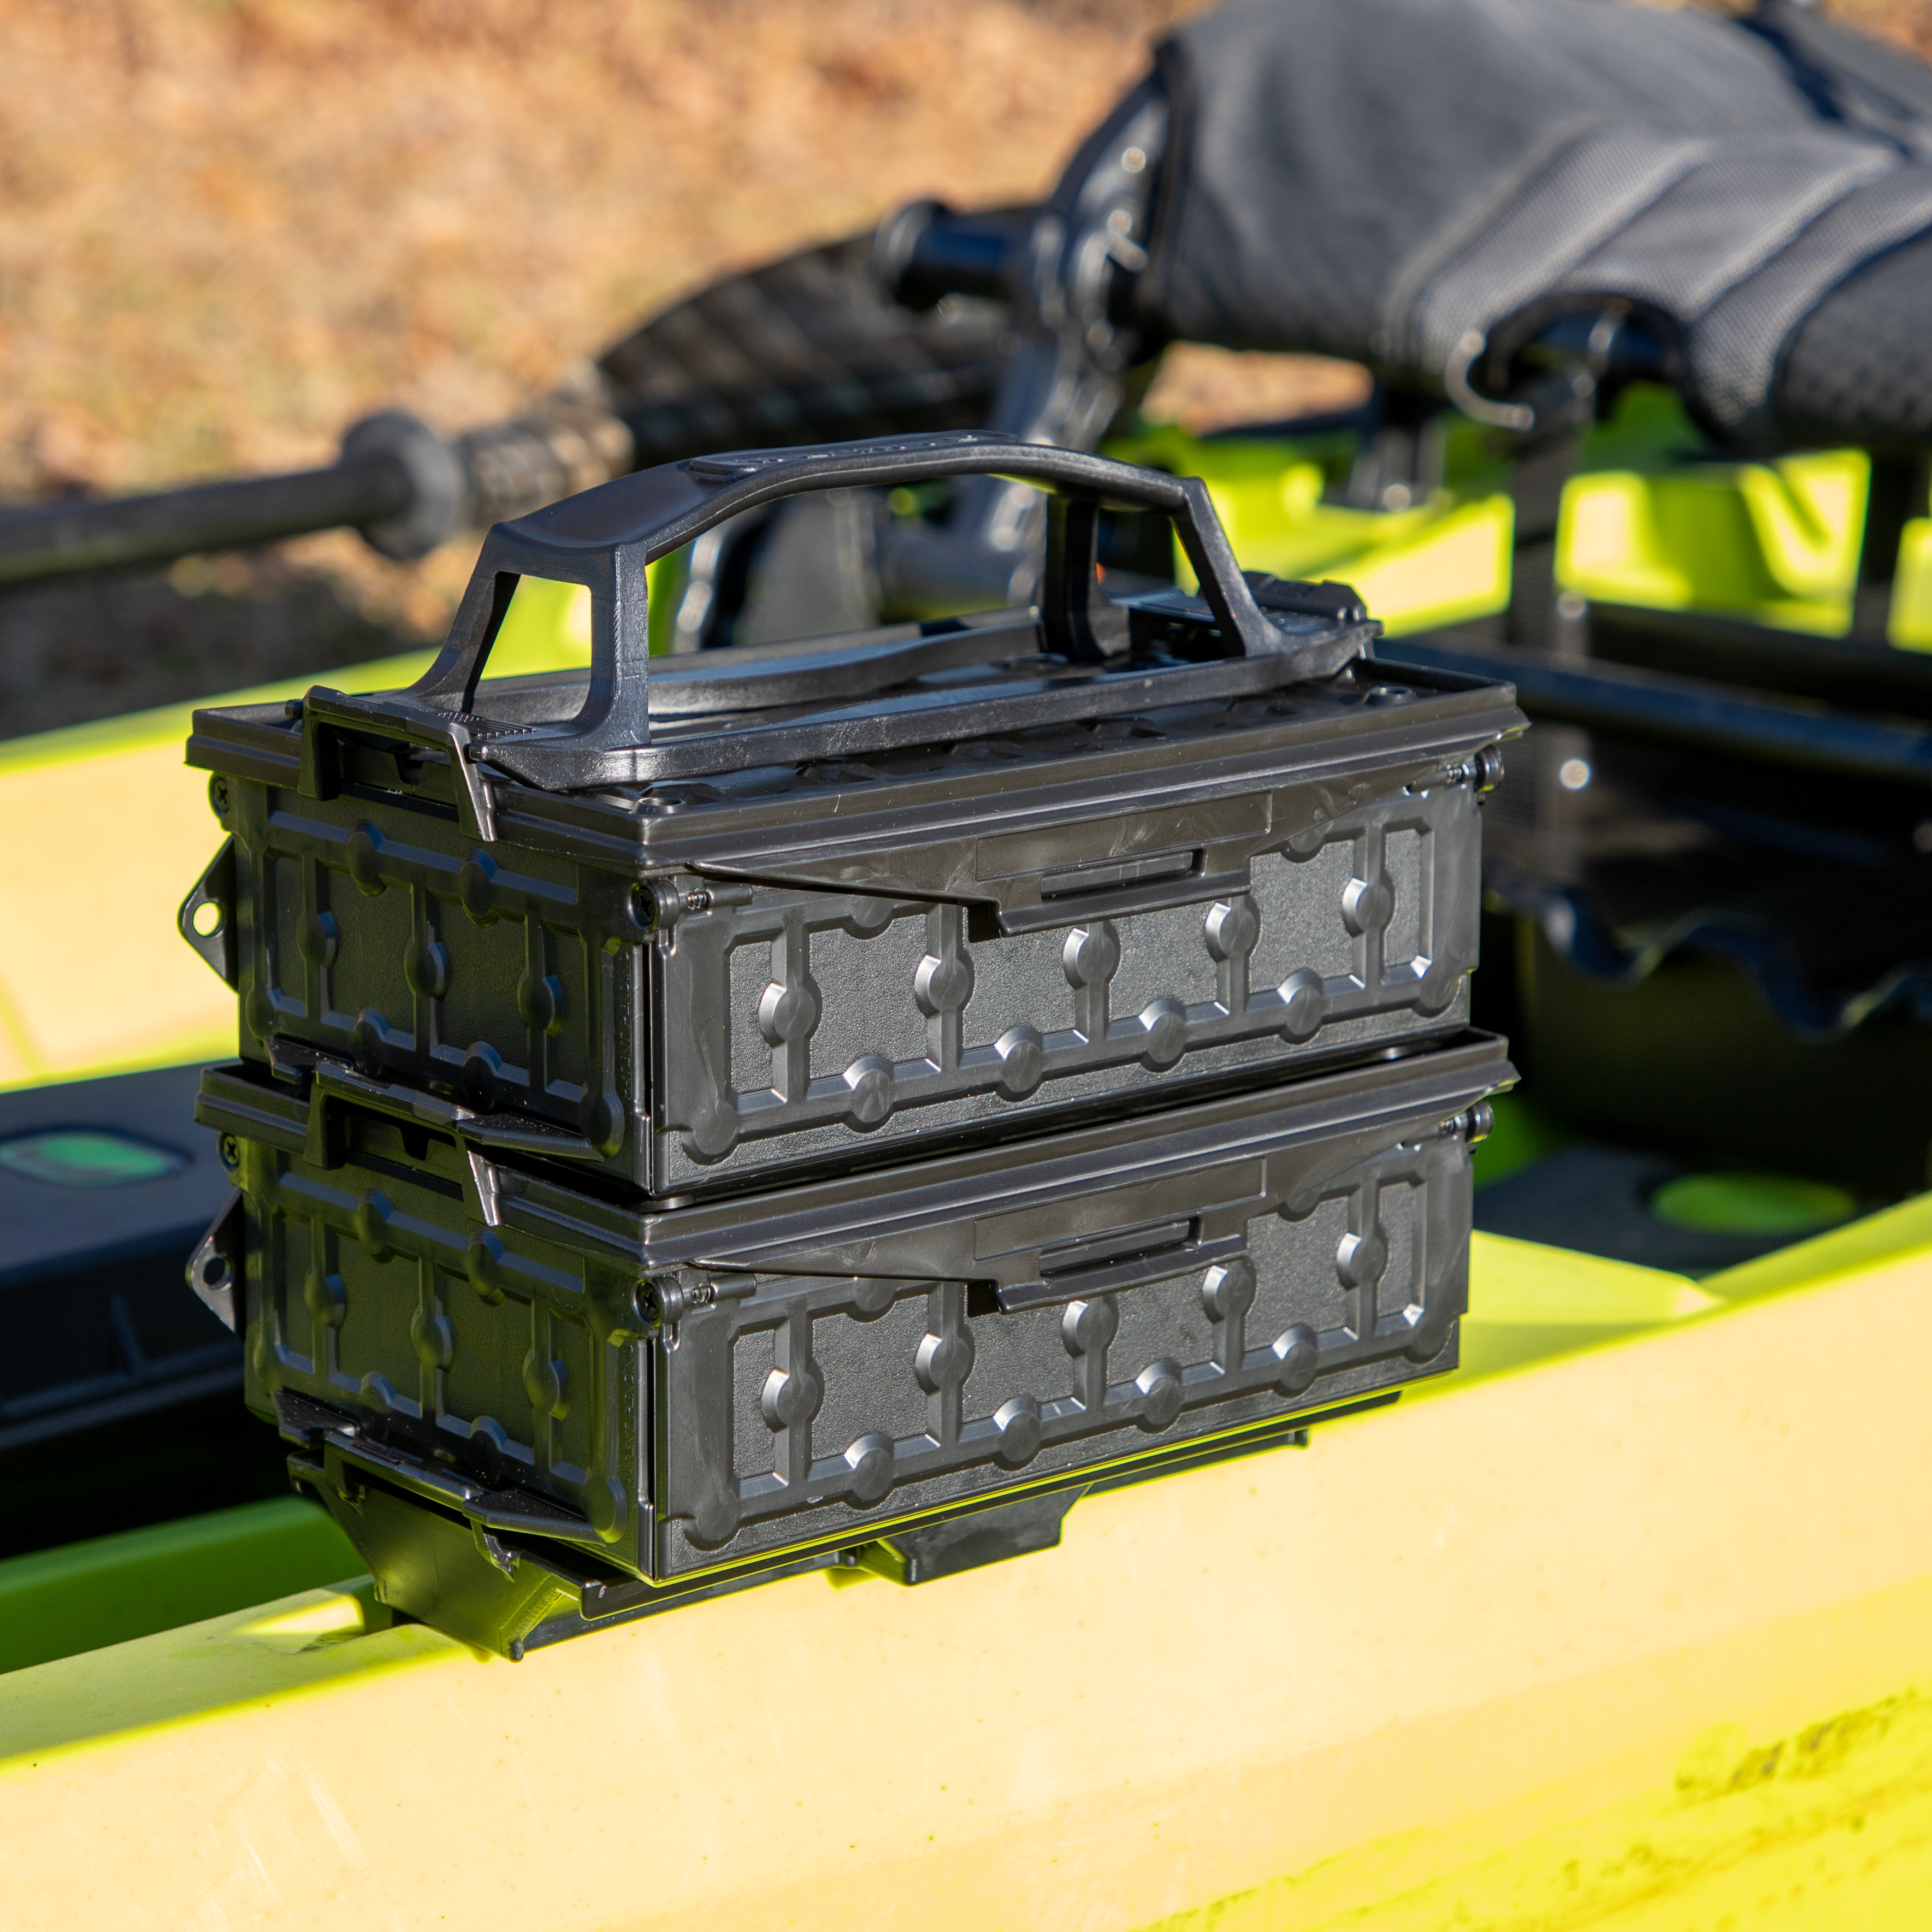 YakAttack Fully Loaded TracPak Combo Kit mounted on a kayak